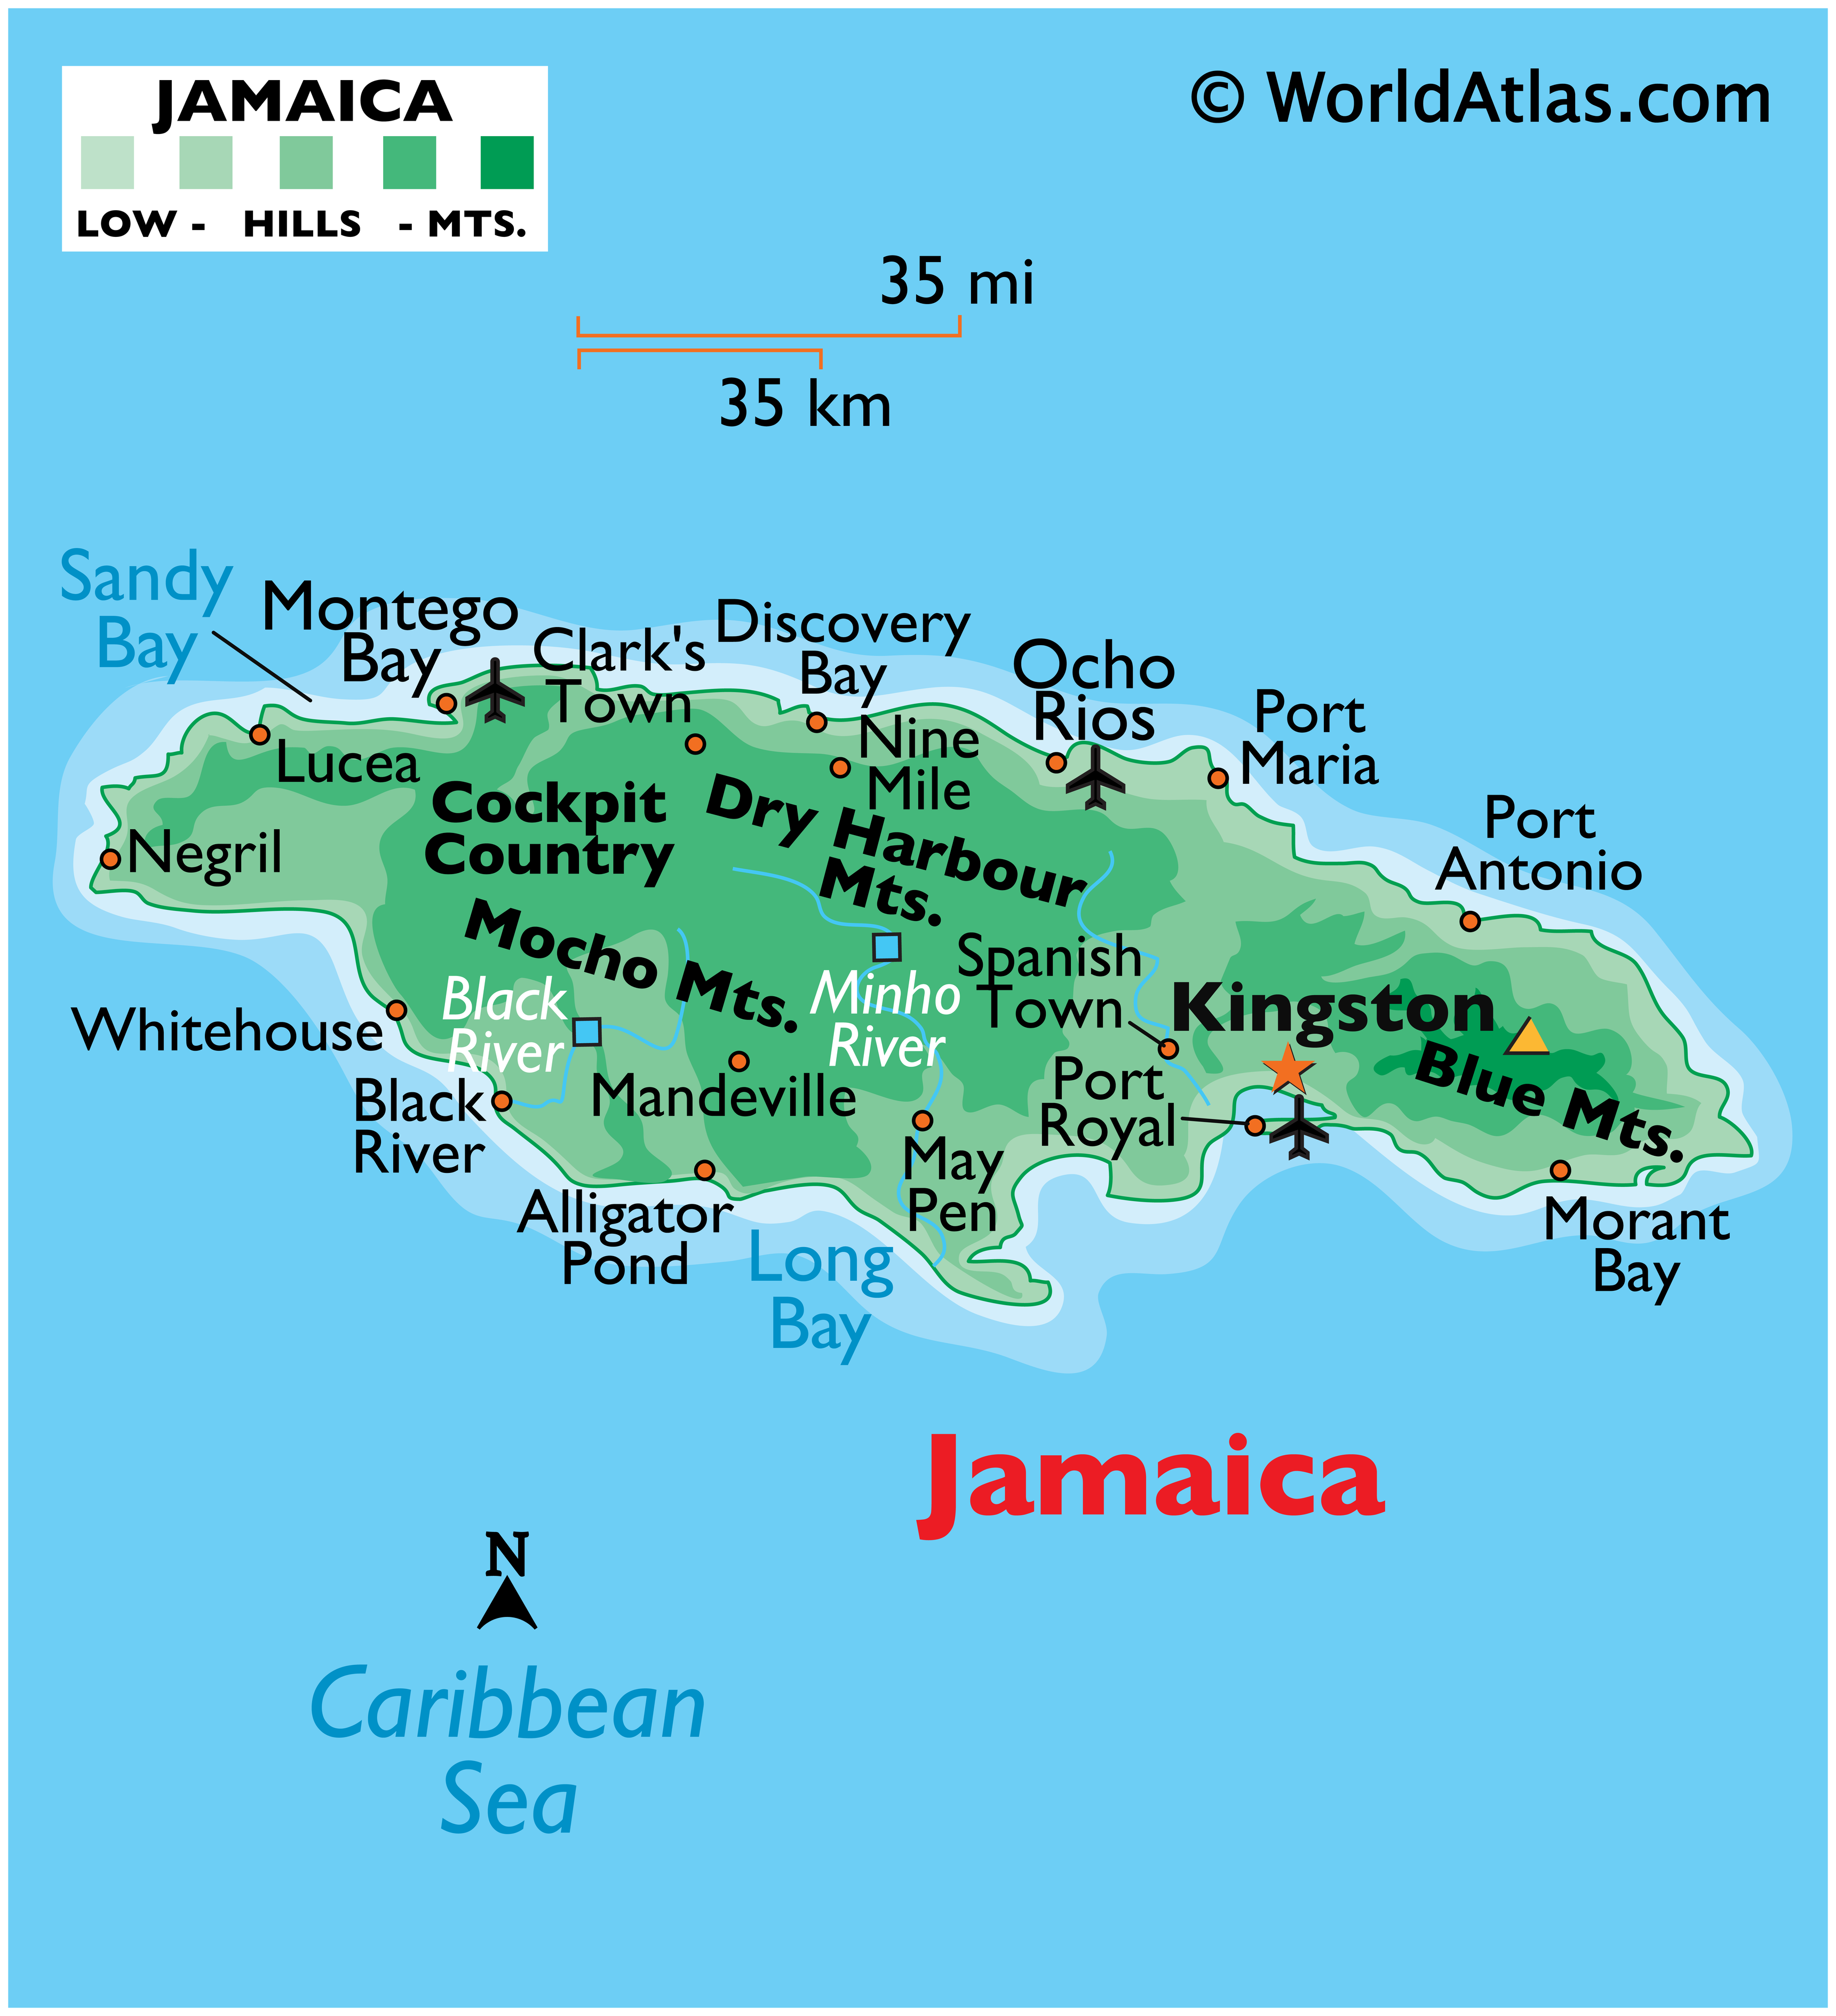 Jamaica Facts on Largest Cities, Populations, Symbols - Worldatlas.com